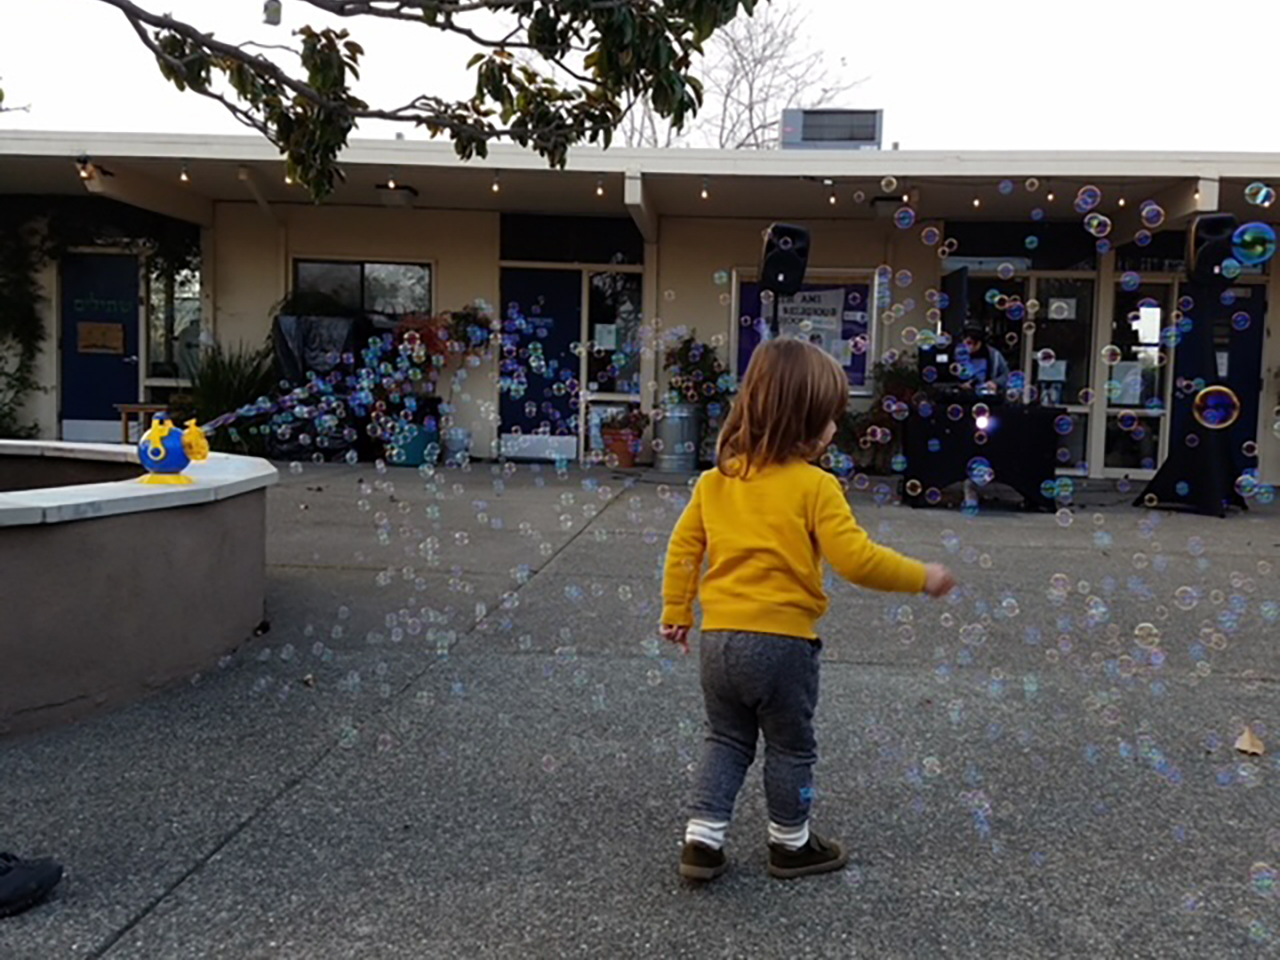 The preschool at Congregation Beth Ami in Santa Rosa. (Photo/Courtesy)